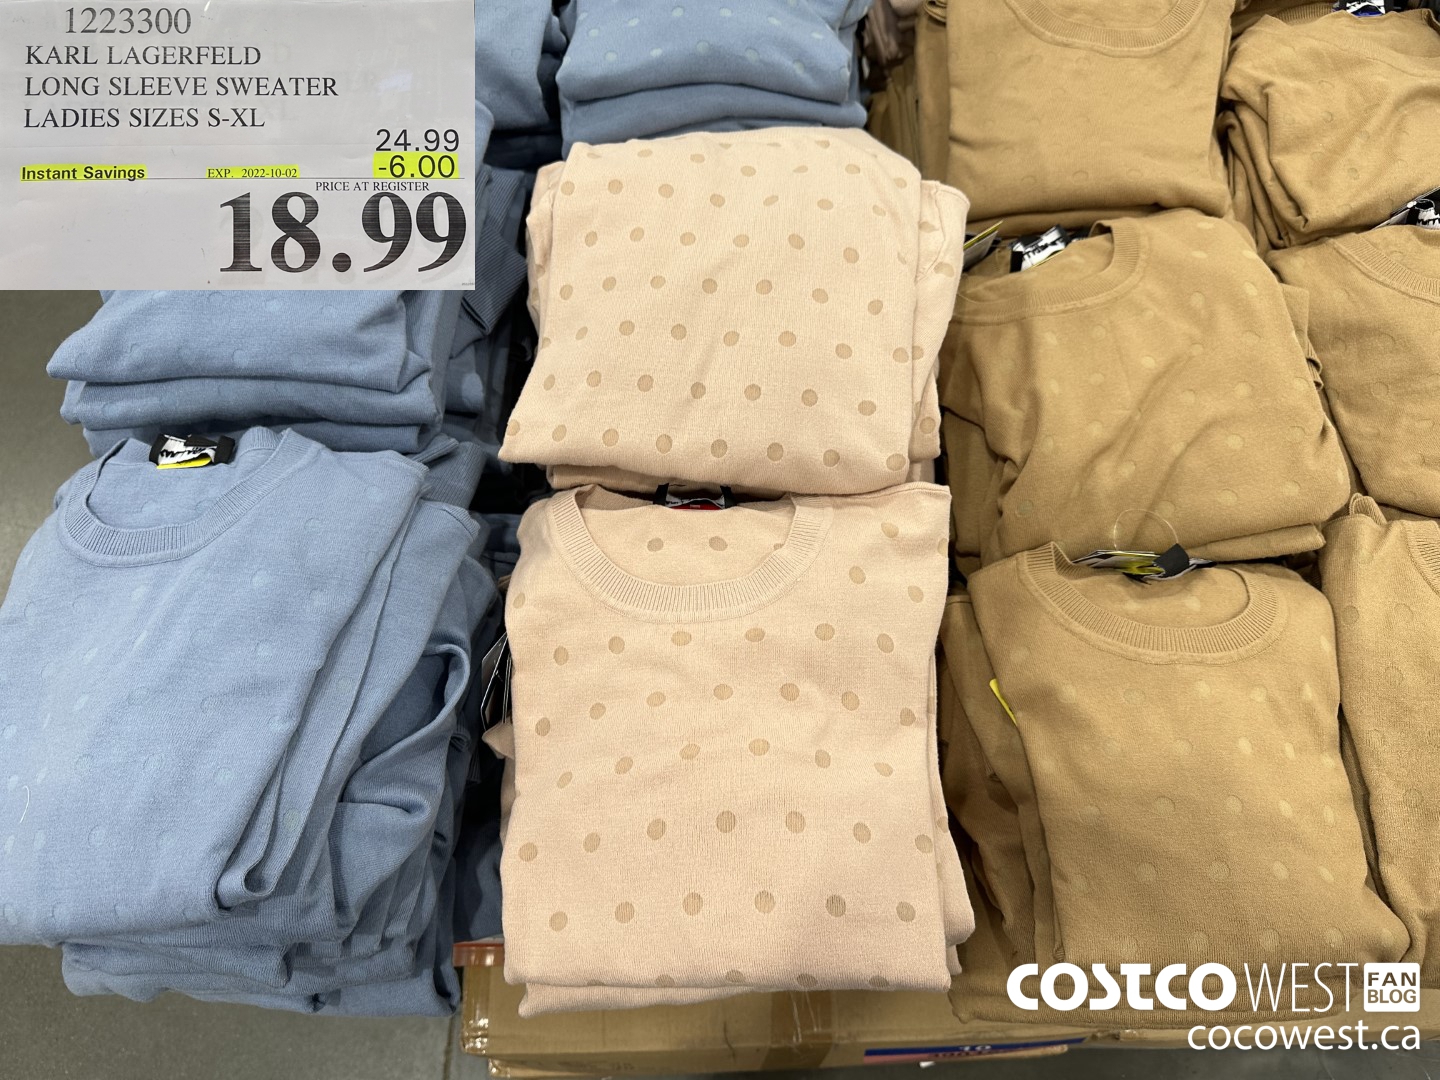 Costco Disney & Harry Potter Ladies' 2-Piece Pajama Sets Just $12.99  (Includes Plus Sizes)